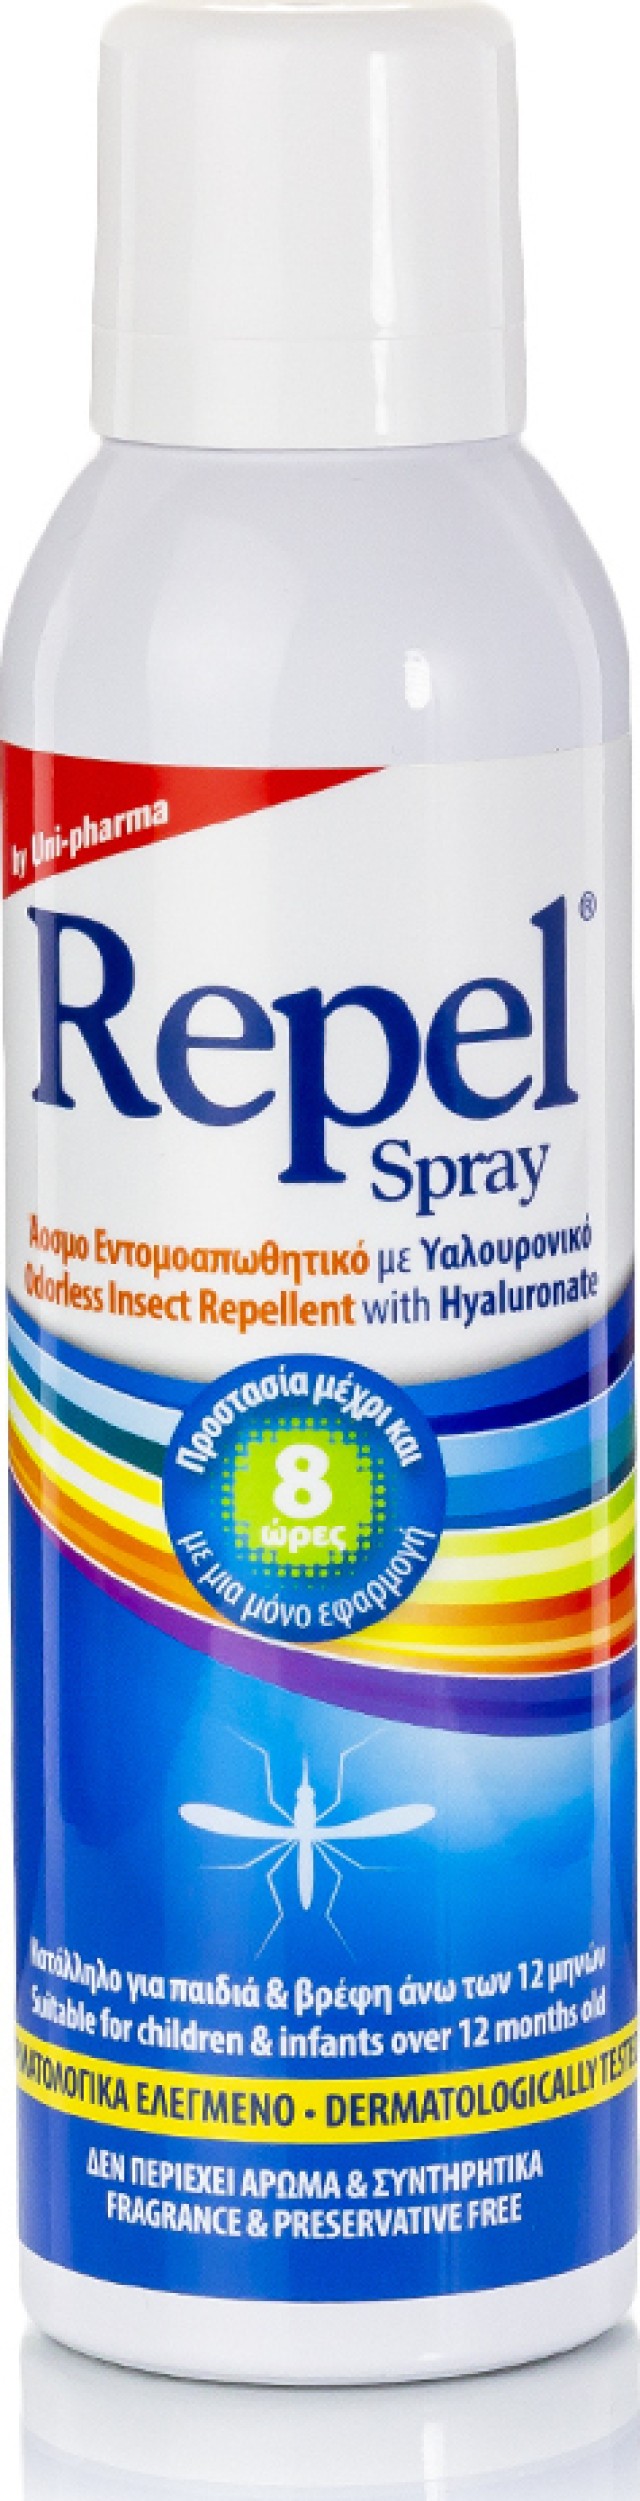 Repel Spray Άοσμο Εντομοαπωθητικό Σπρέι, 150ml